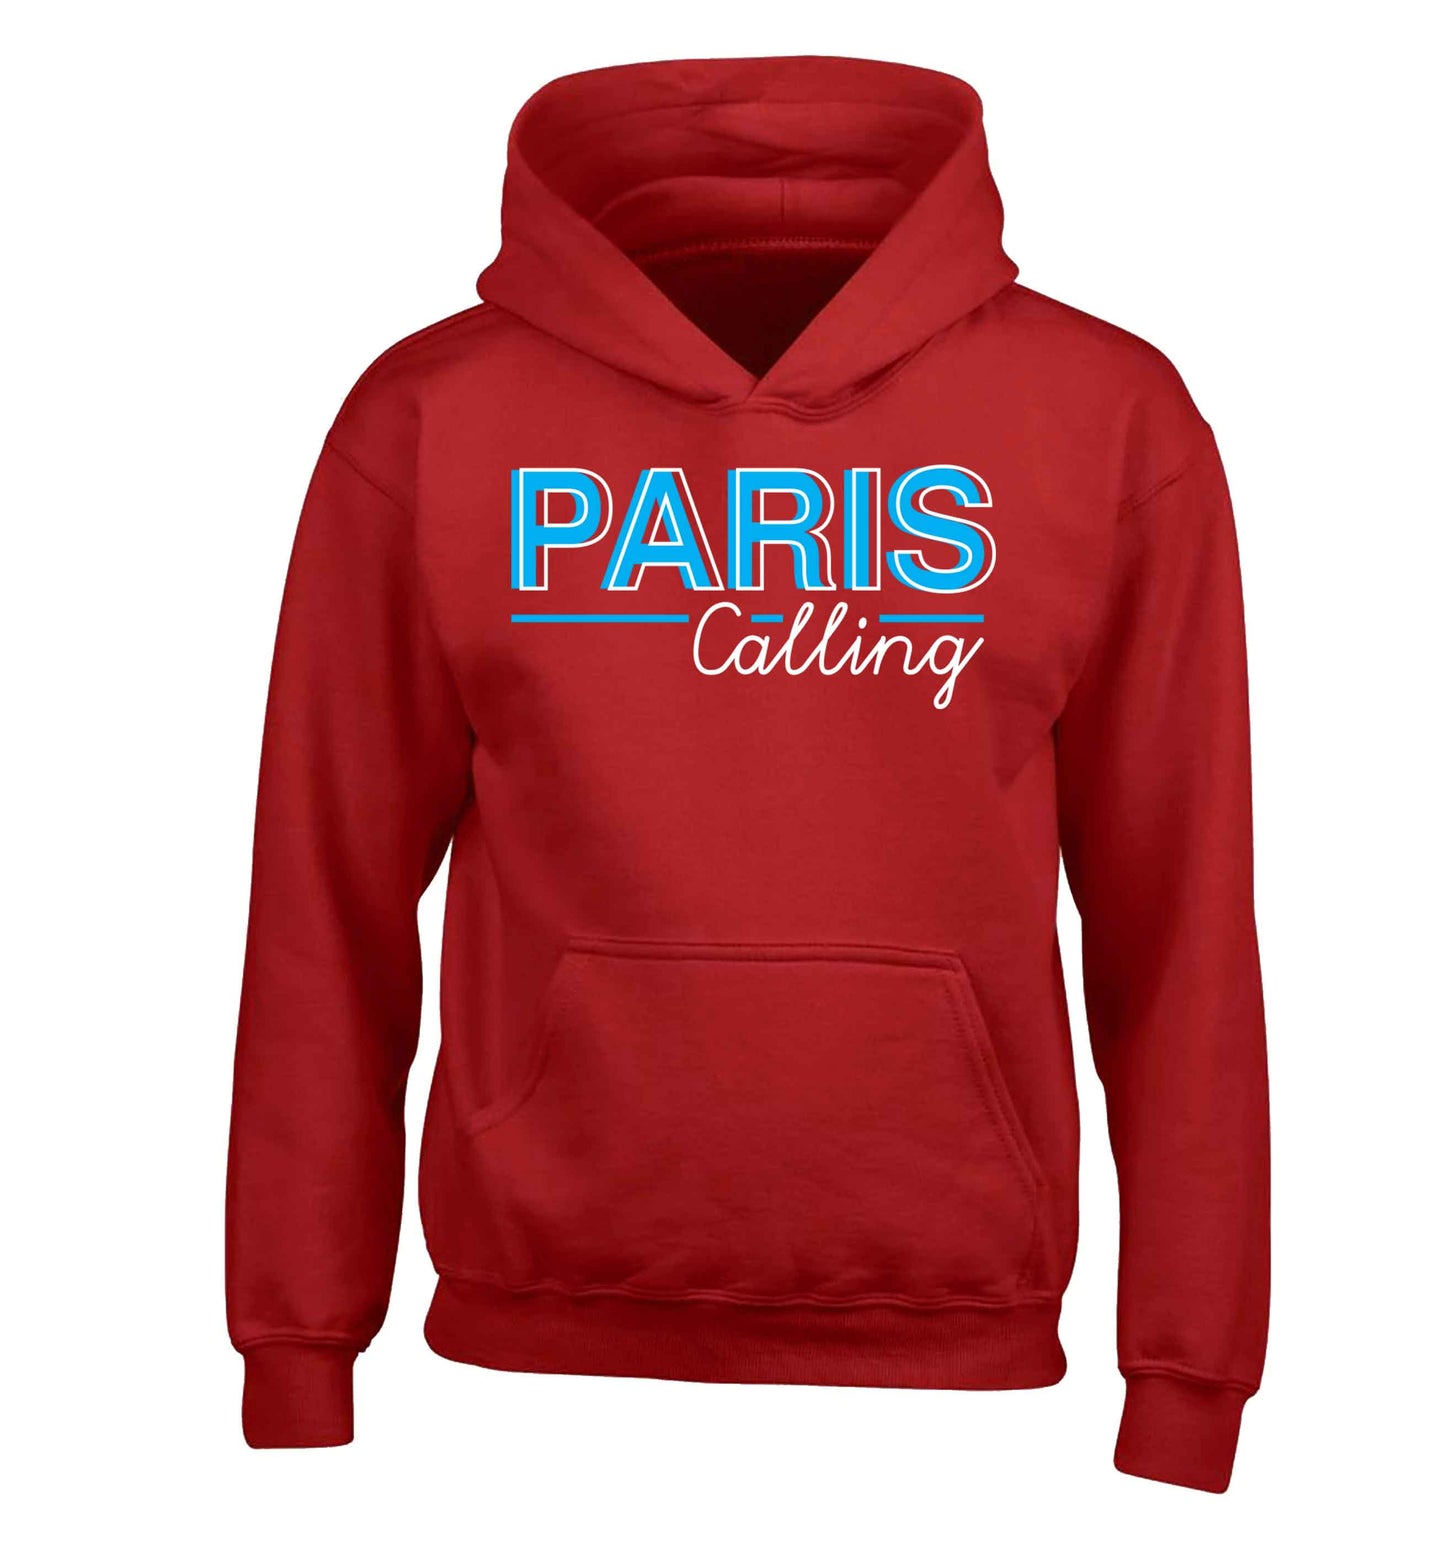 Paris calling children's red hoodie 12-13 Years